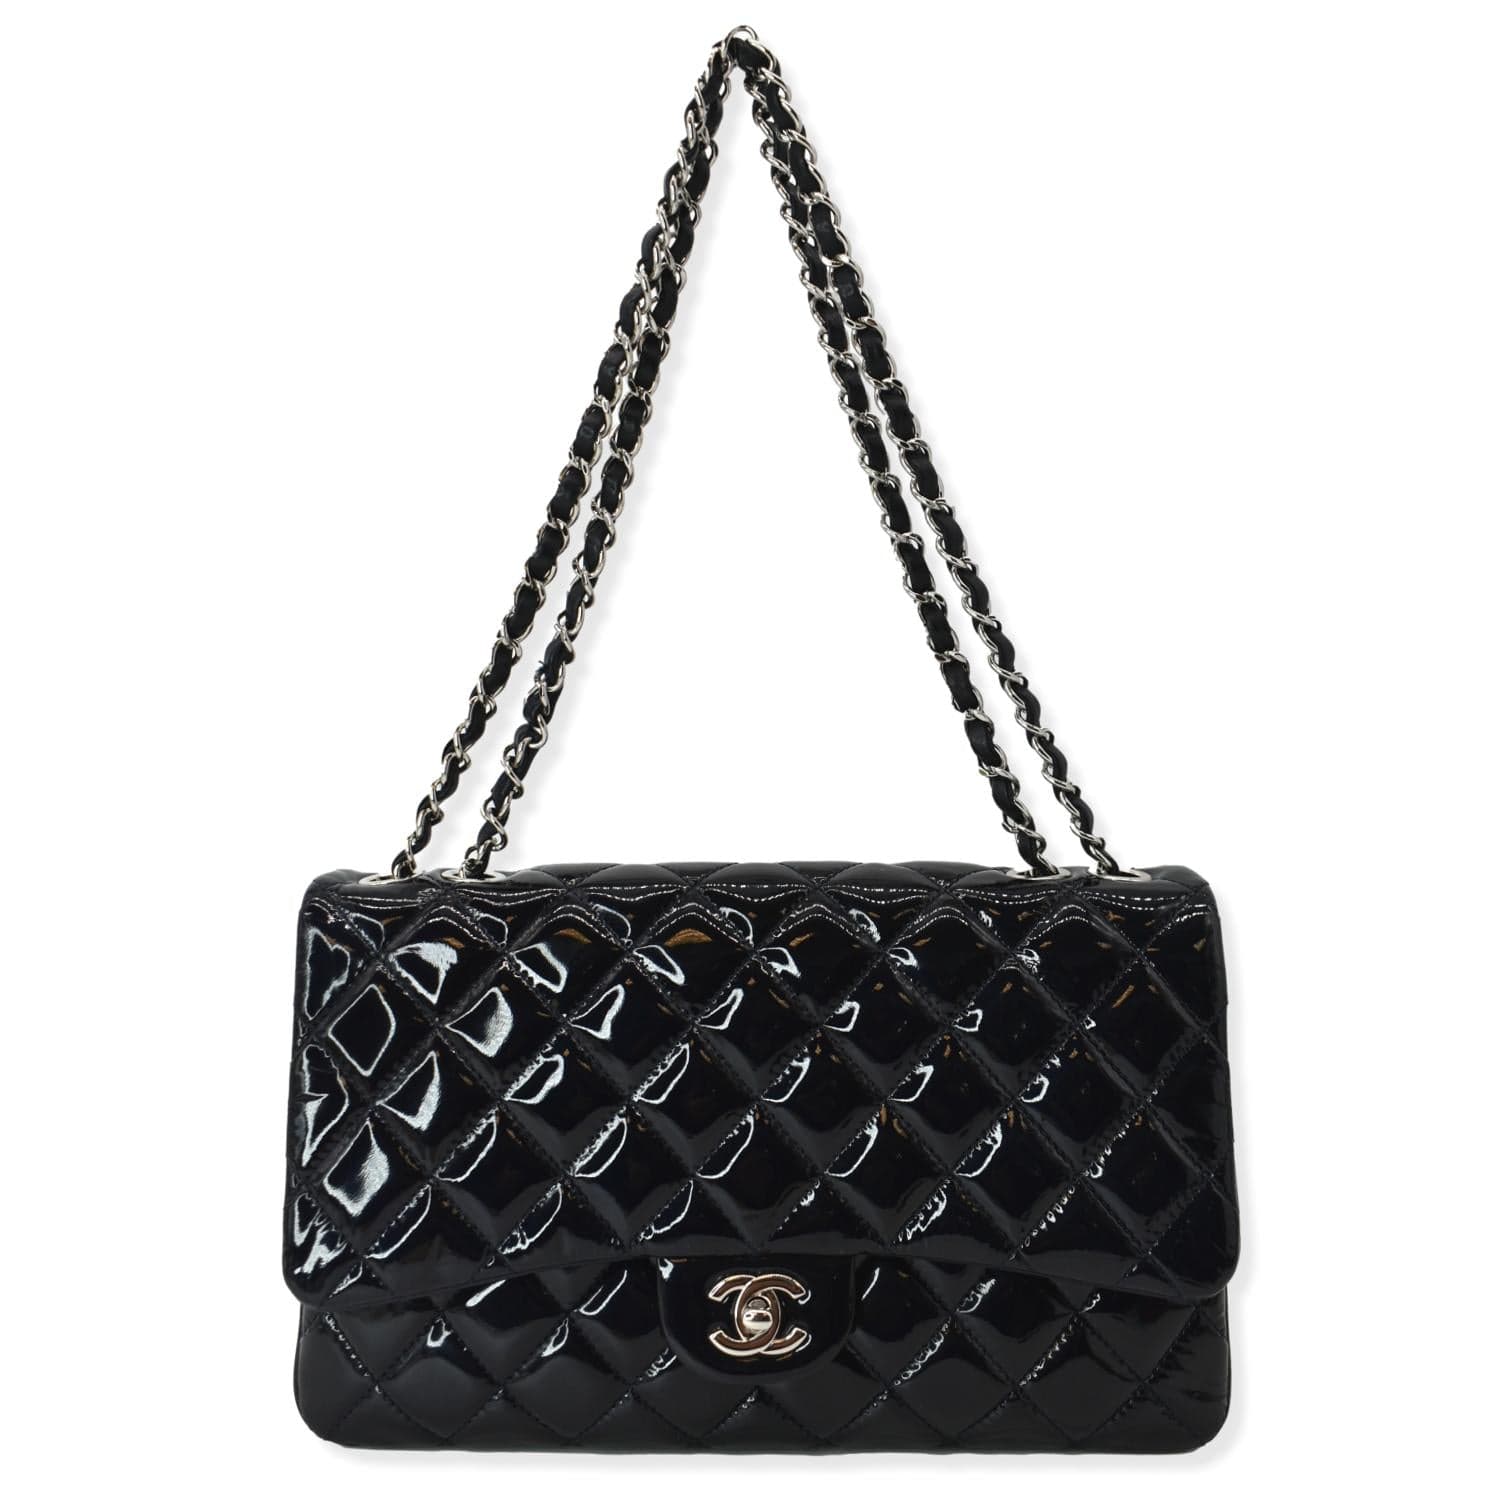 Fashion « Chanel-Vuitton », Sale n°2045, Lot n°428